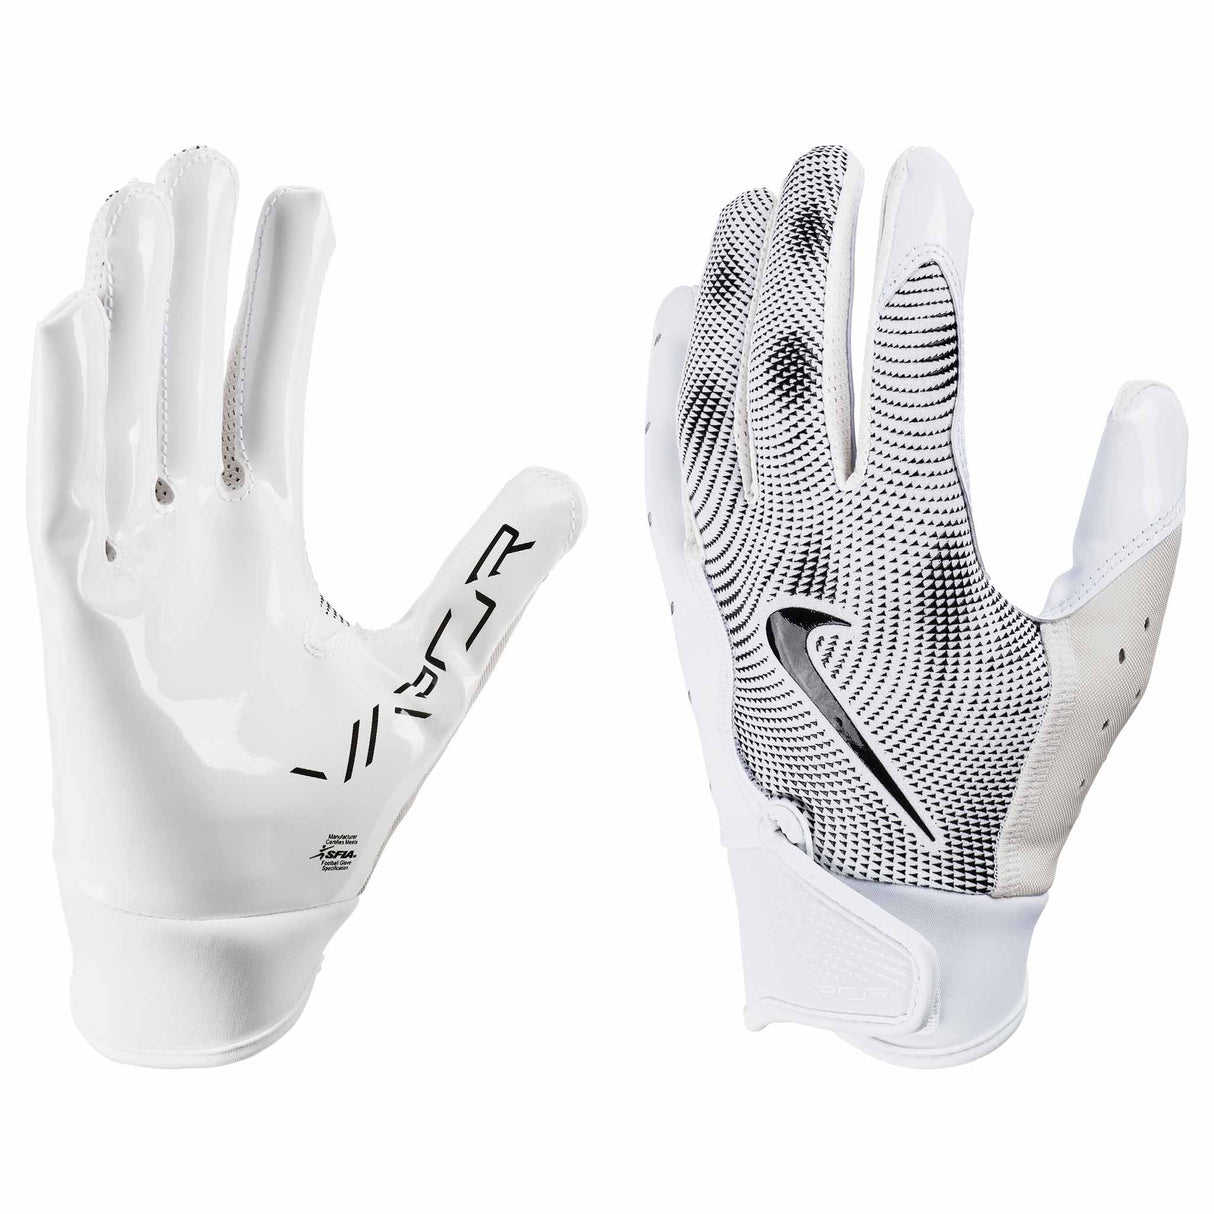 Nike Youth Vapor Jet 8.0 FG gants de football américain pour enfants - White / White / Black